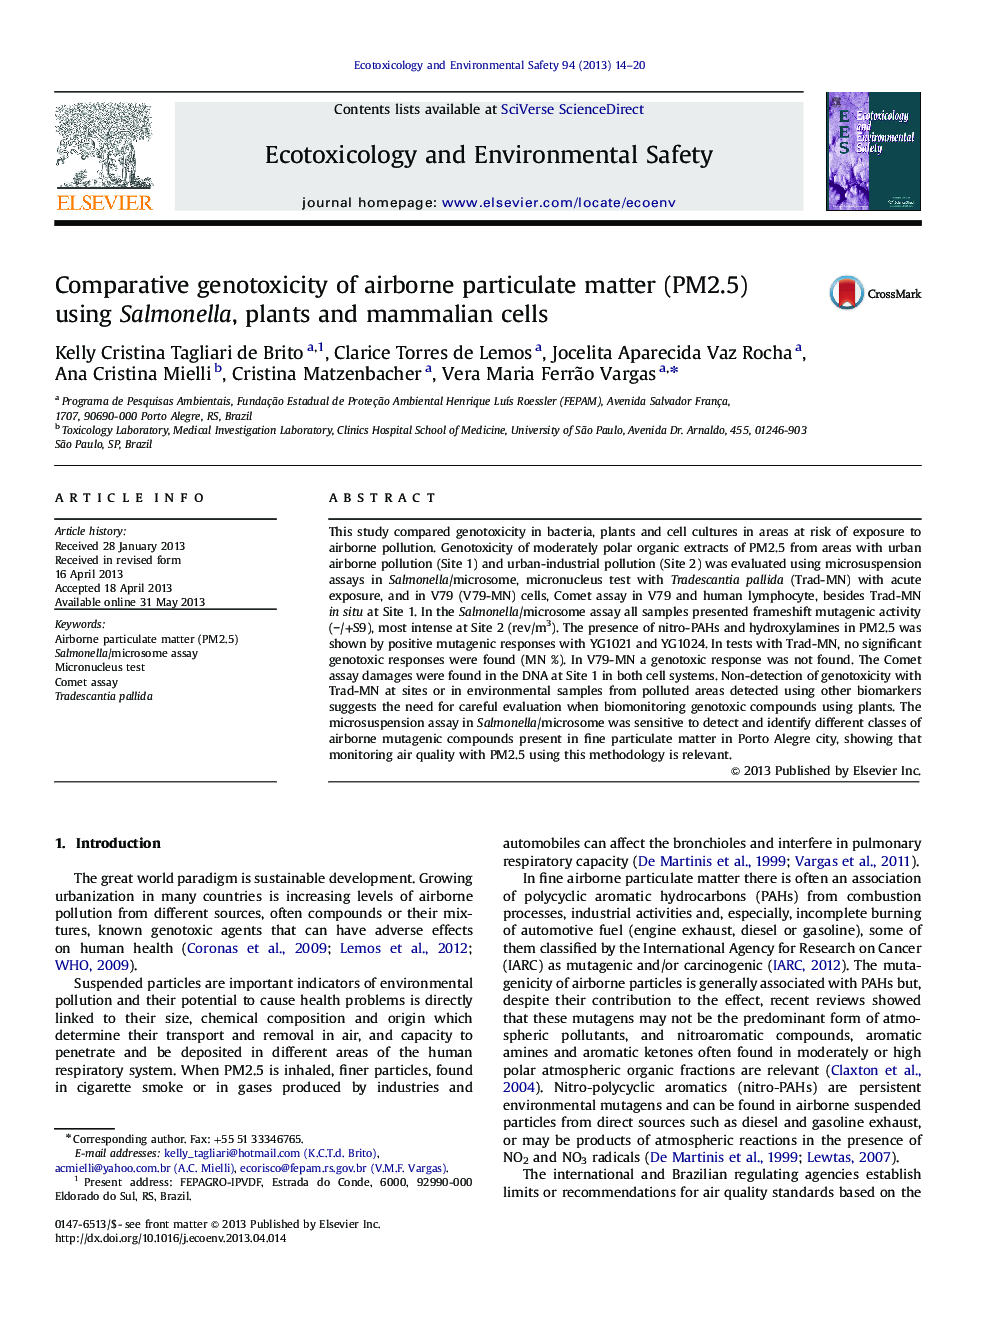 Comparative genotoxicity of airborne particulate matter (PM2.5) using Salmonella, plants and mammalian cells